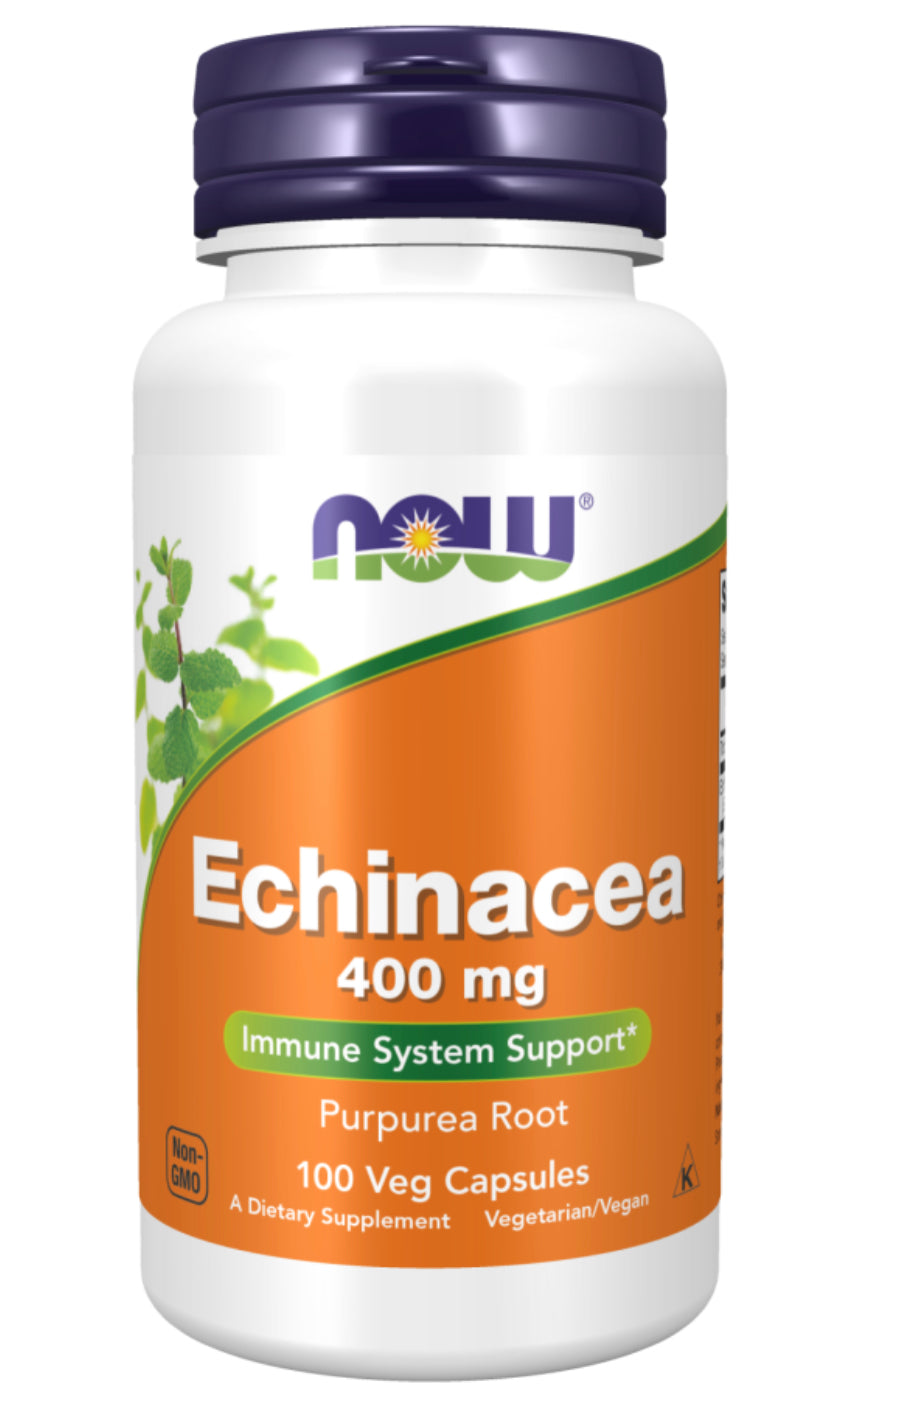 Now Echinacea 400mg 100 capsules